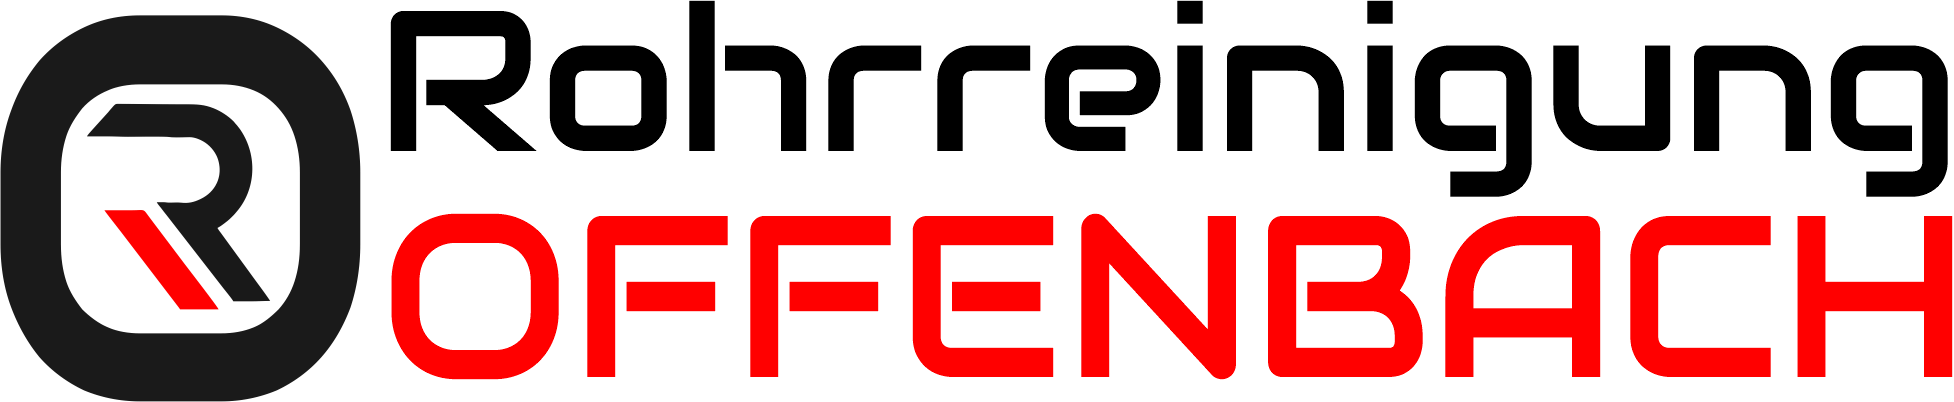 Rohrreinigung Offenbach Logo